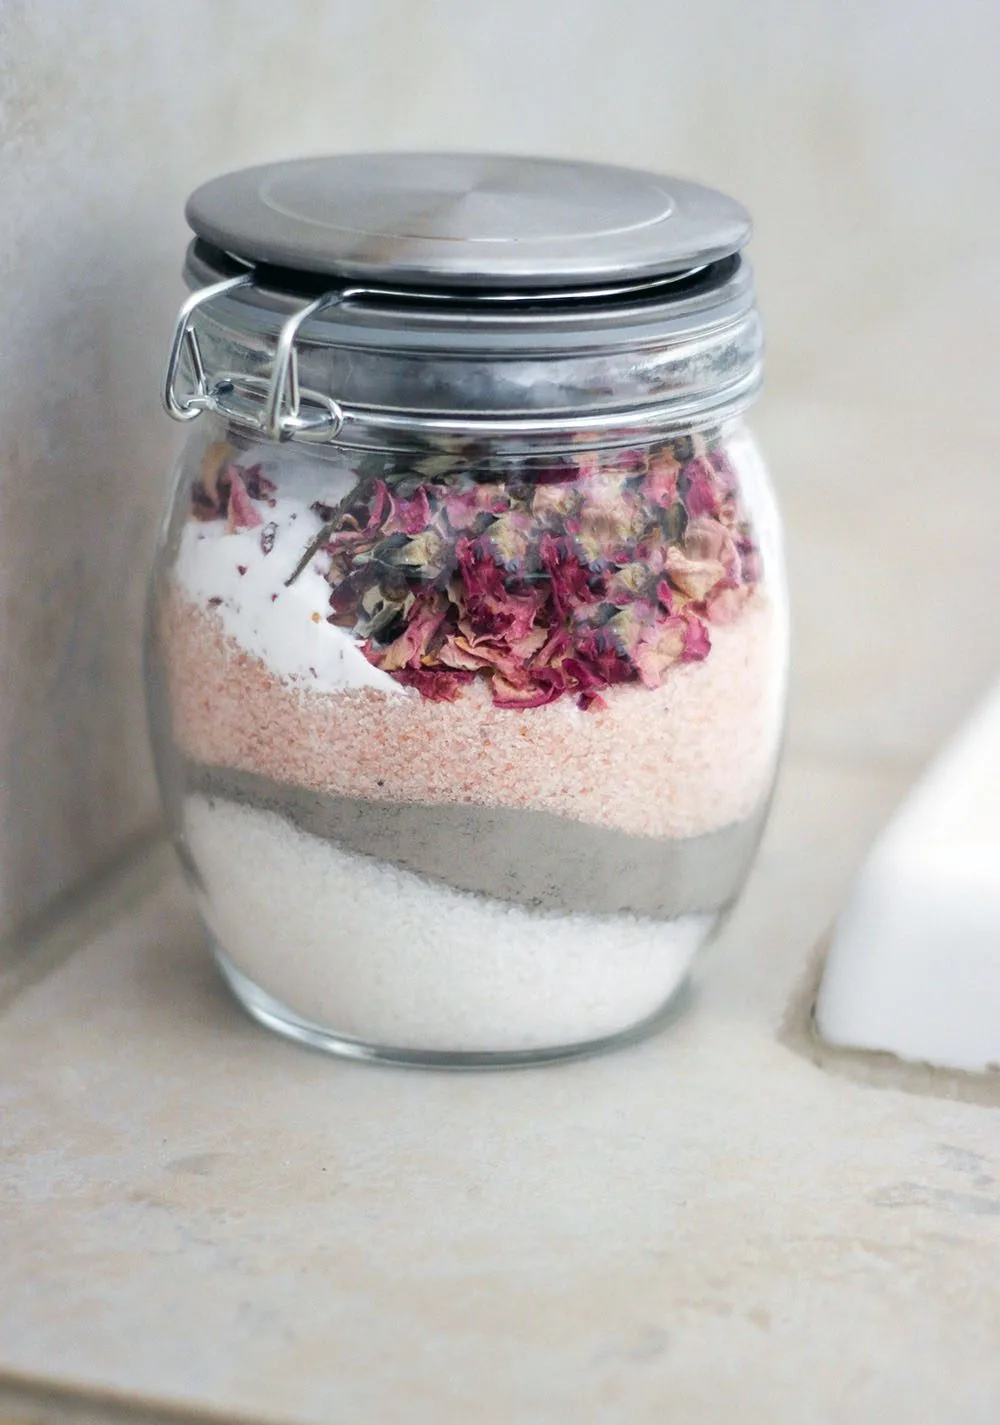 Rose bath salts in a jar.